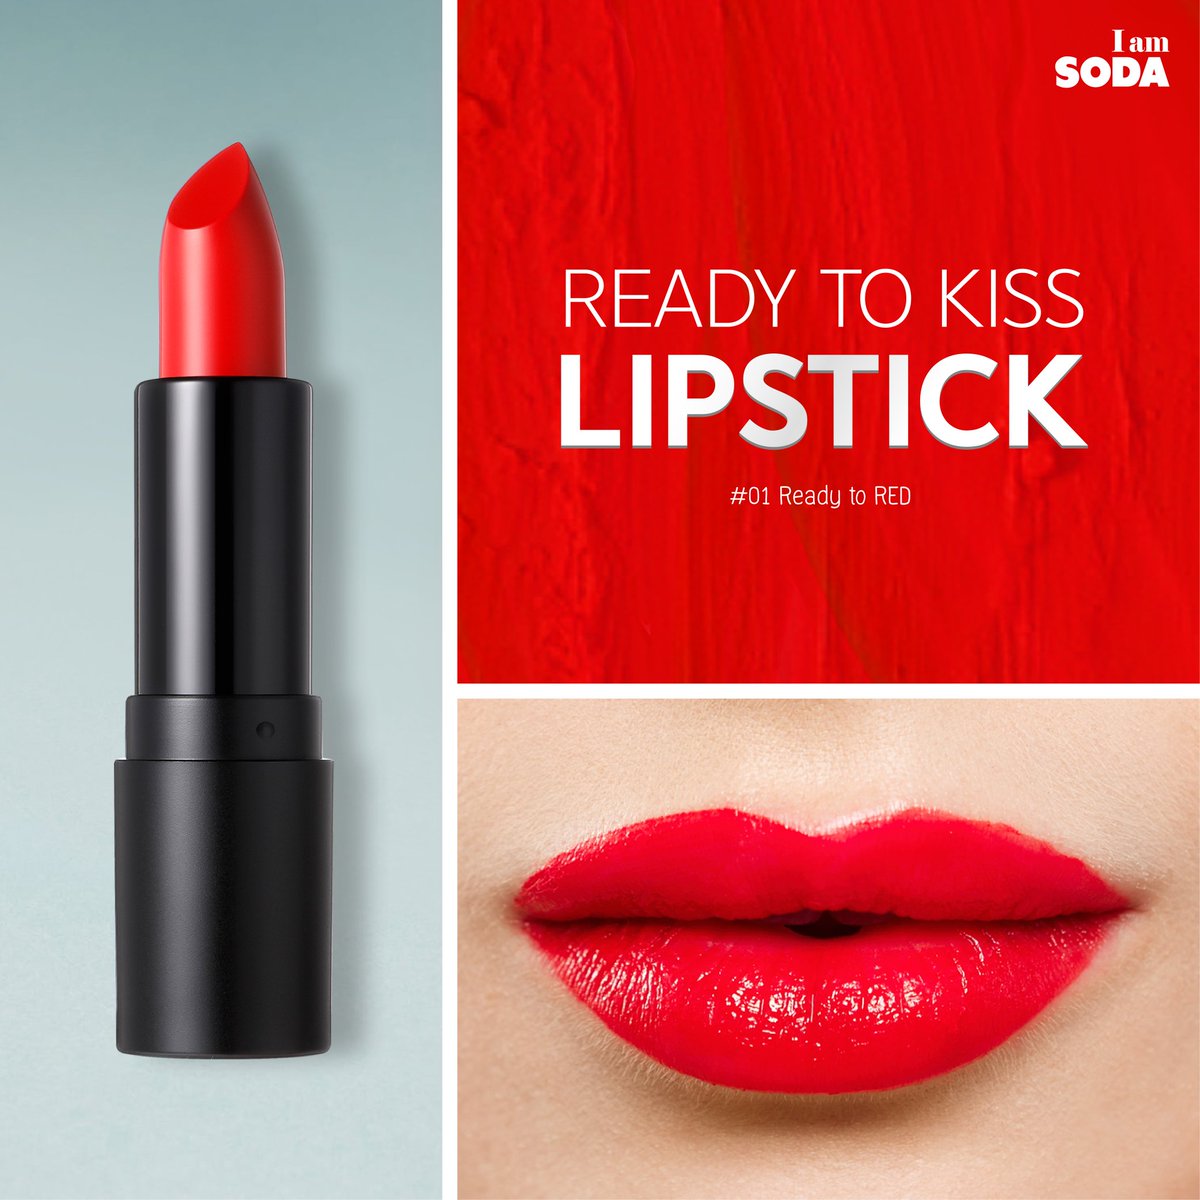 I am SODA Ready to kiss Lipstick #Red 3.5g ลิปสติก Made in Korea เนื้อเนียนนุ่ม เม็ดสีละเอียด ทำให้ปิดร่องปากได้อย่างเนียนกริบ จะสายแซ่บหรือสายหวานต้องไม่พลาด